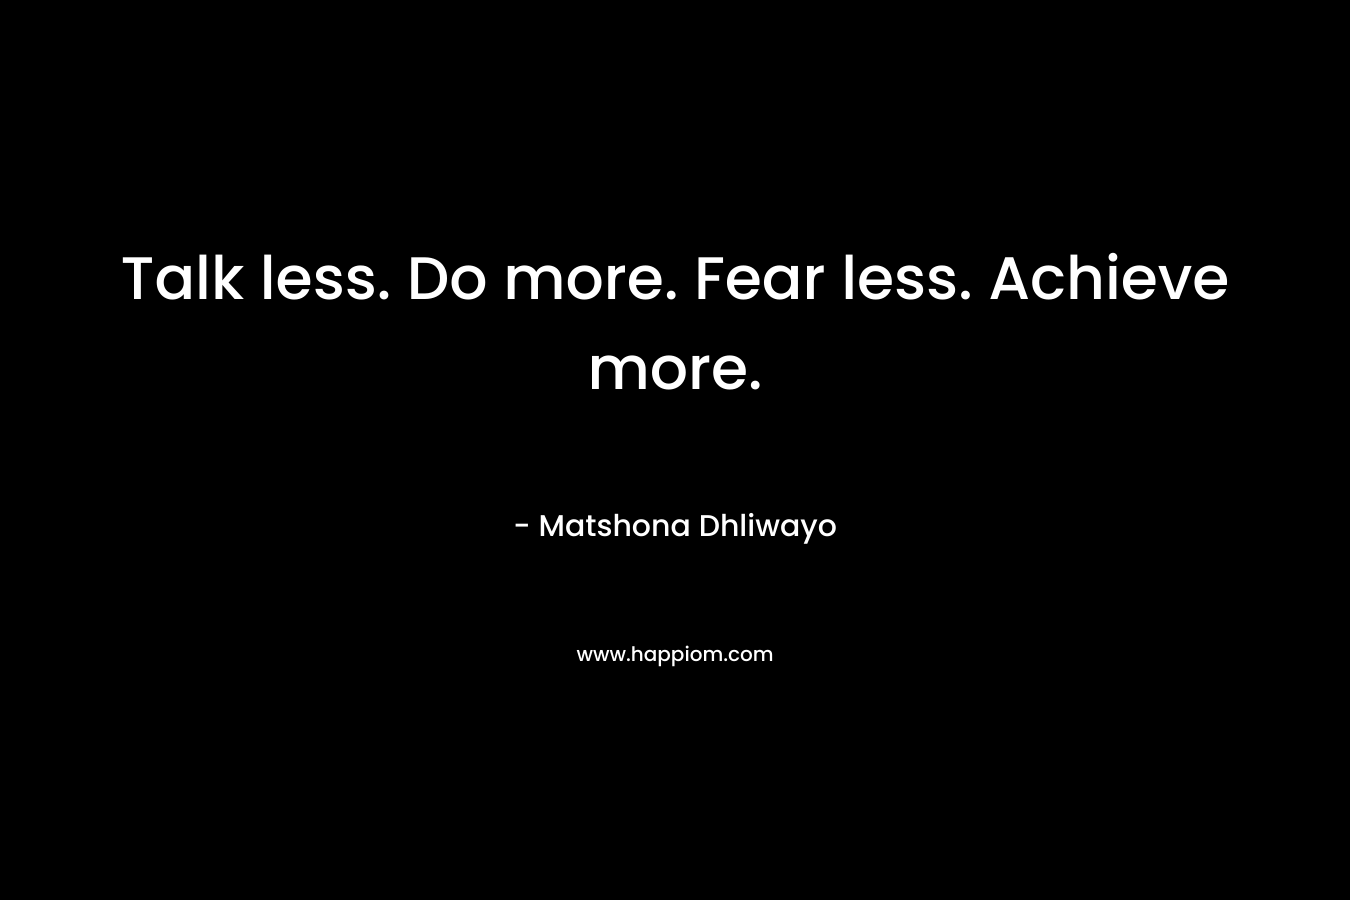 Talk less. Do more. Fear less. Achieve more.